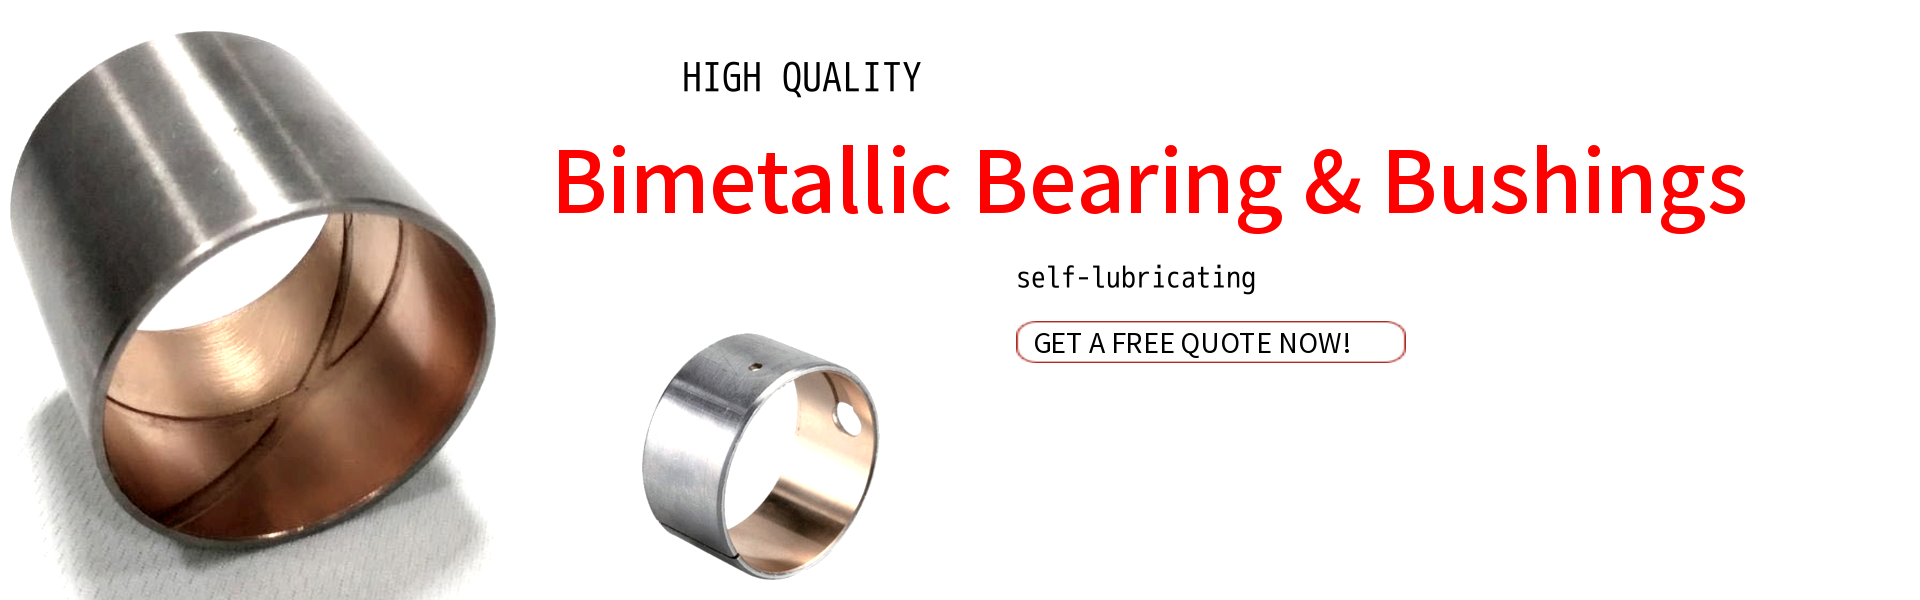 Leaf Spring Pin Connecting Rod Steel Bronze Bimetal Bushing for Automotive Engines 